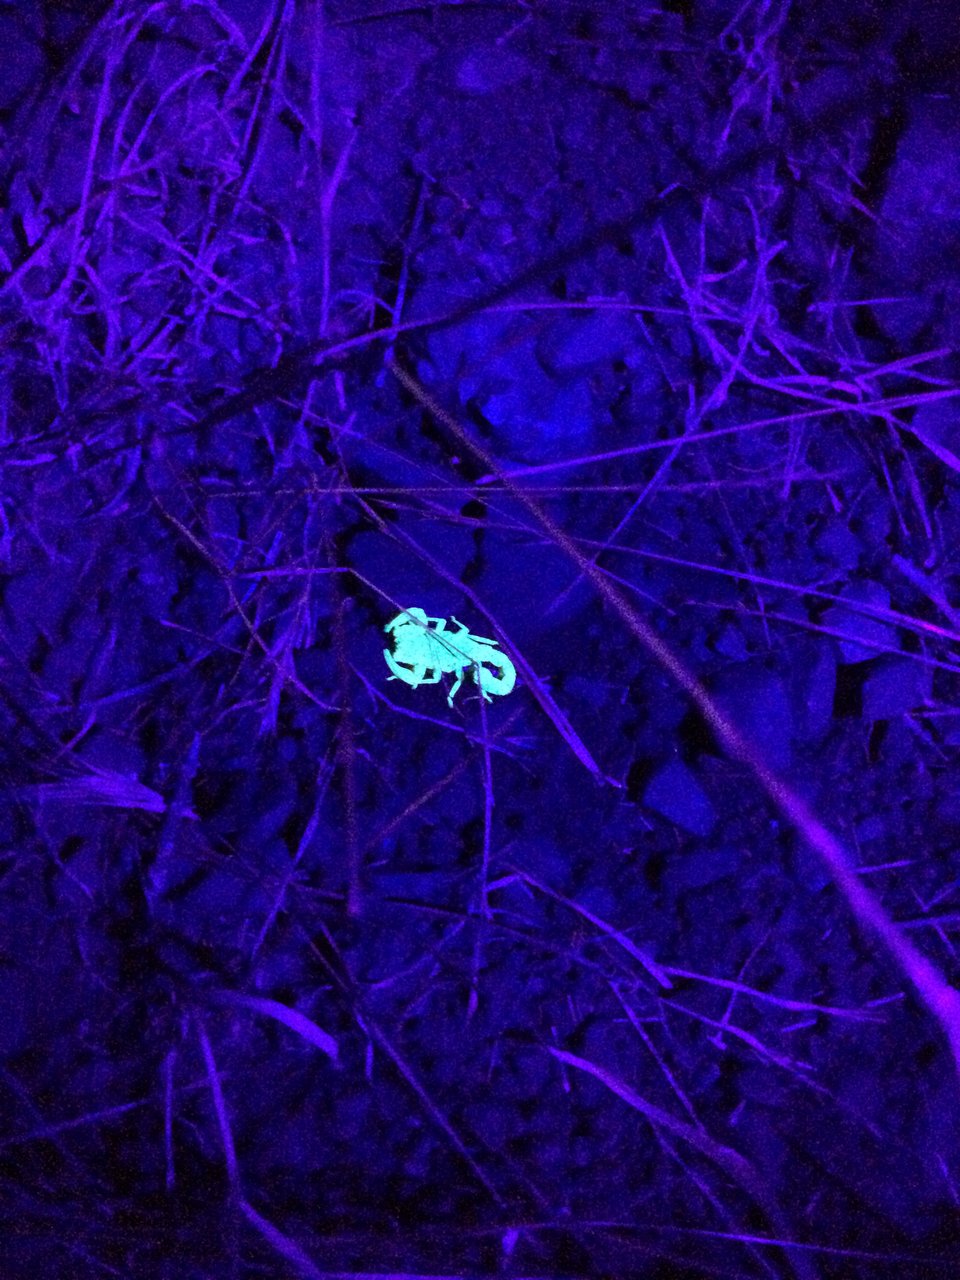 Scorpion 13- With UV